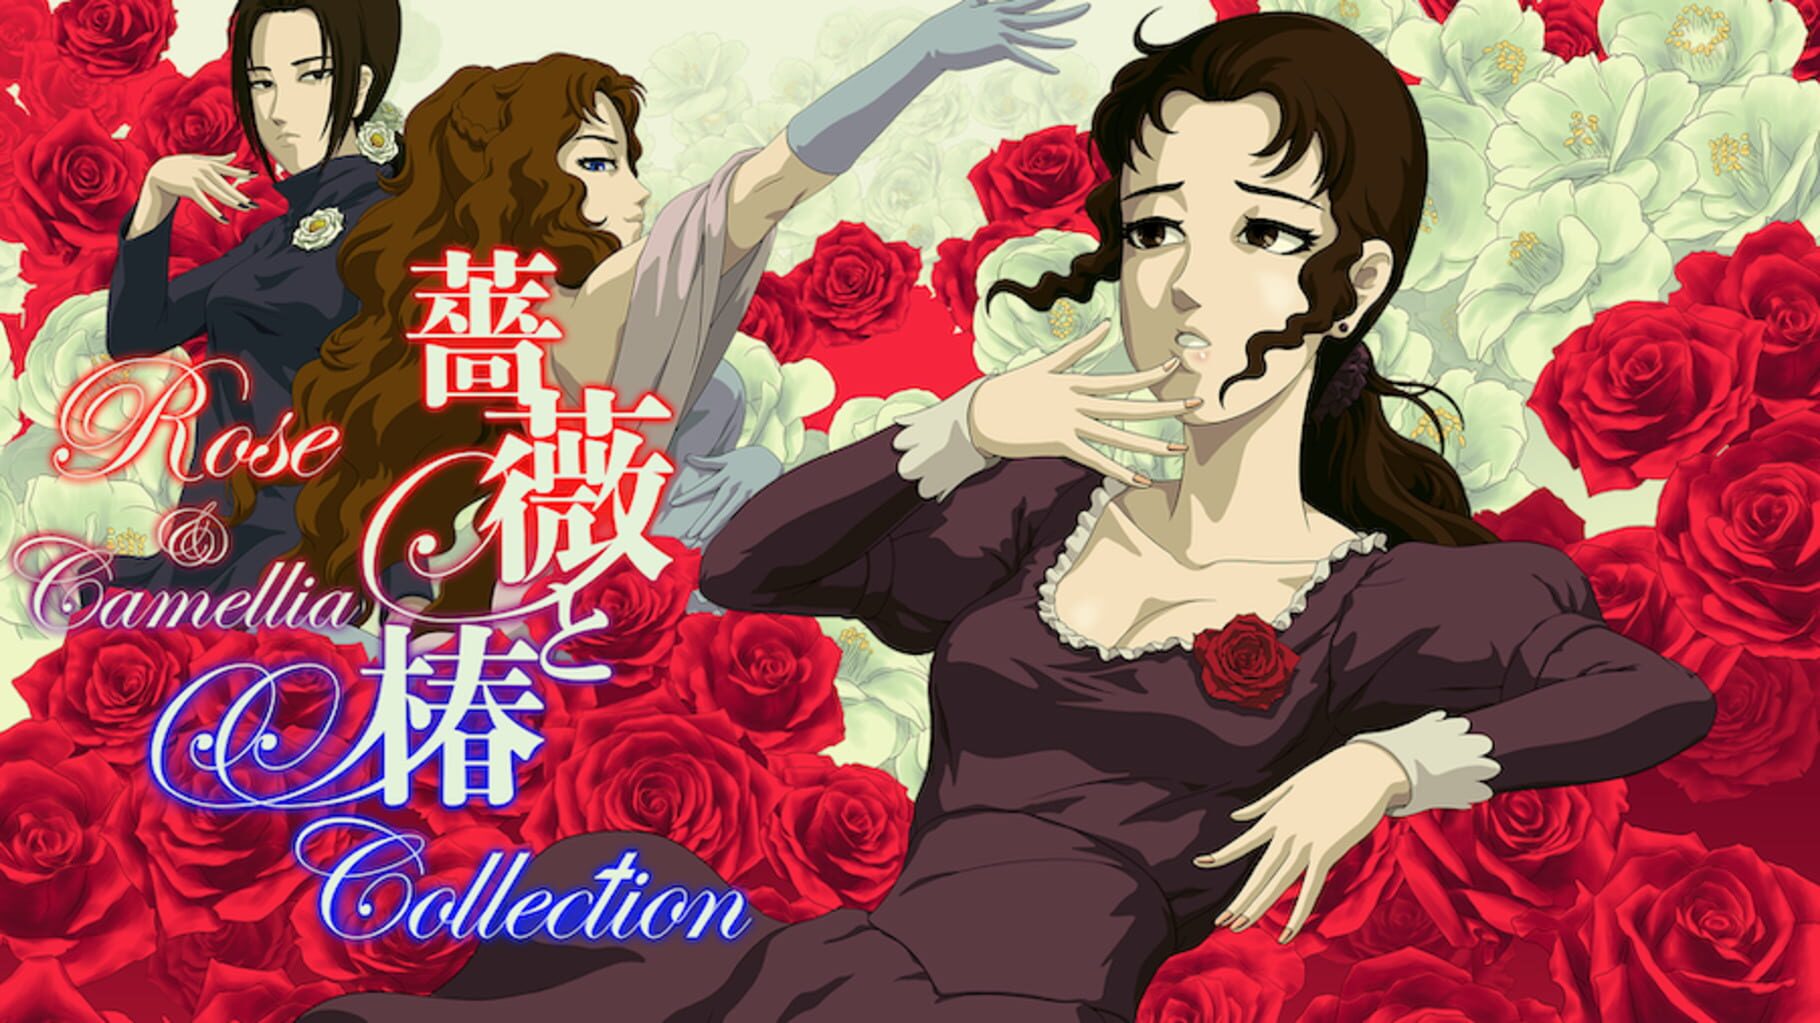 Rose & Camellia Collection artwork